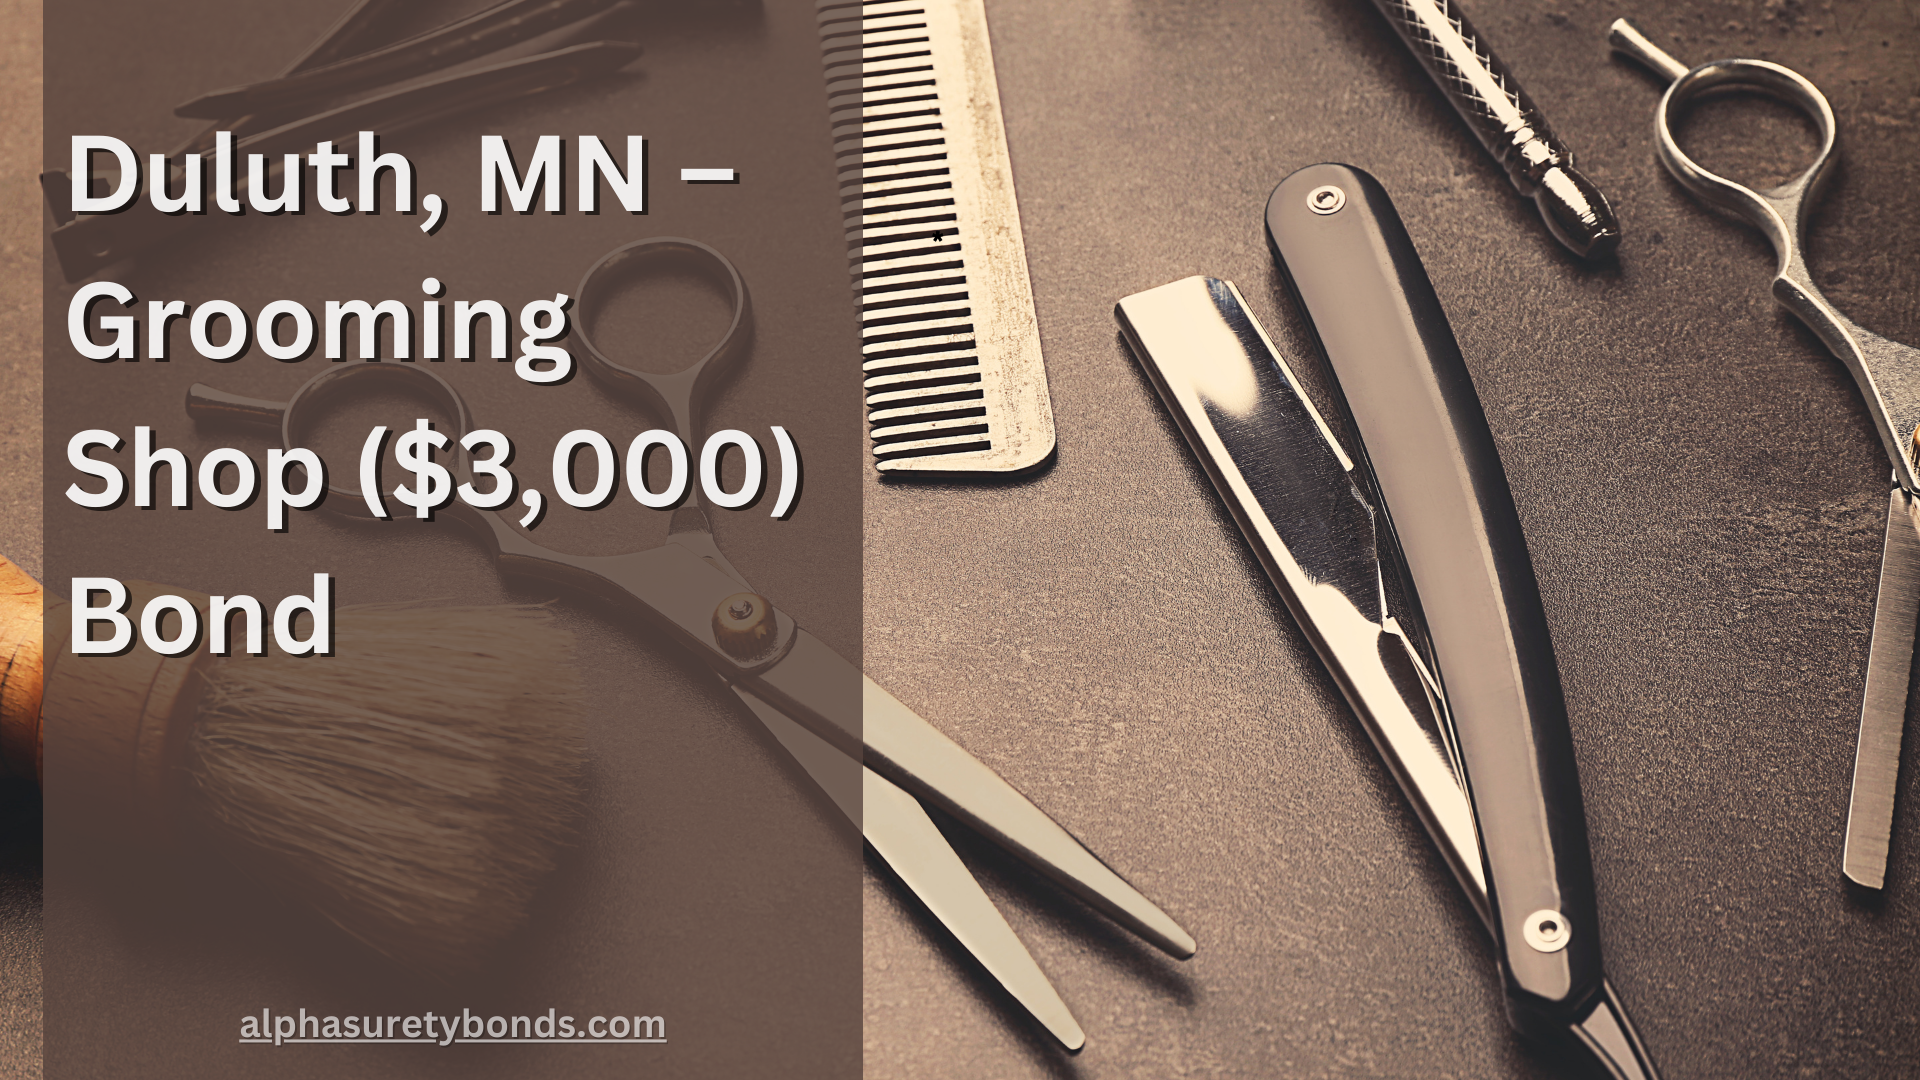 Duluth, MN – Grooming Shop ($3,000) Bond